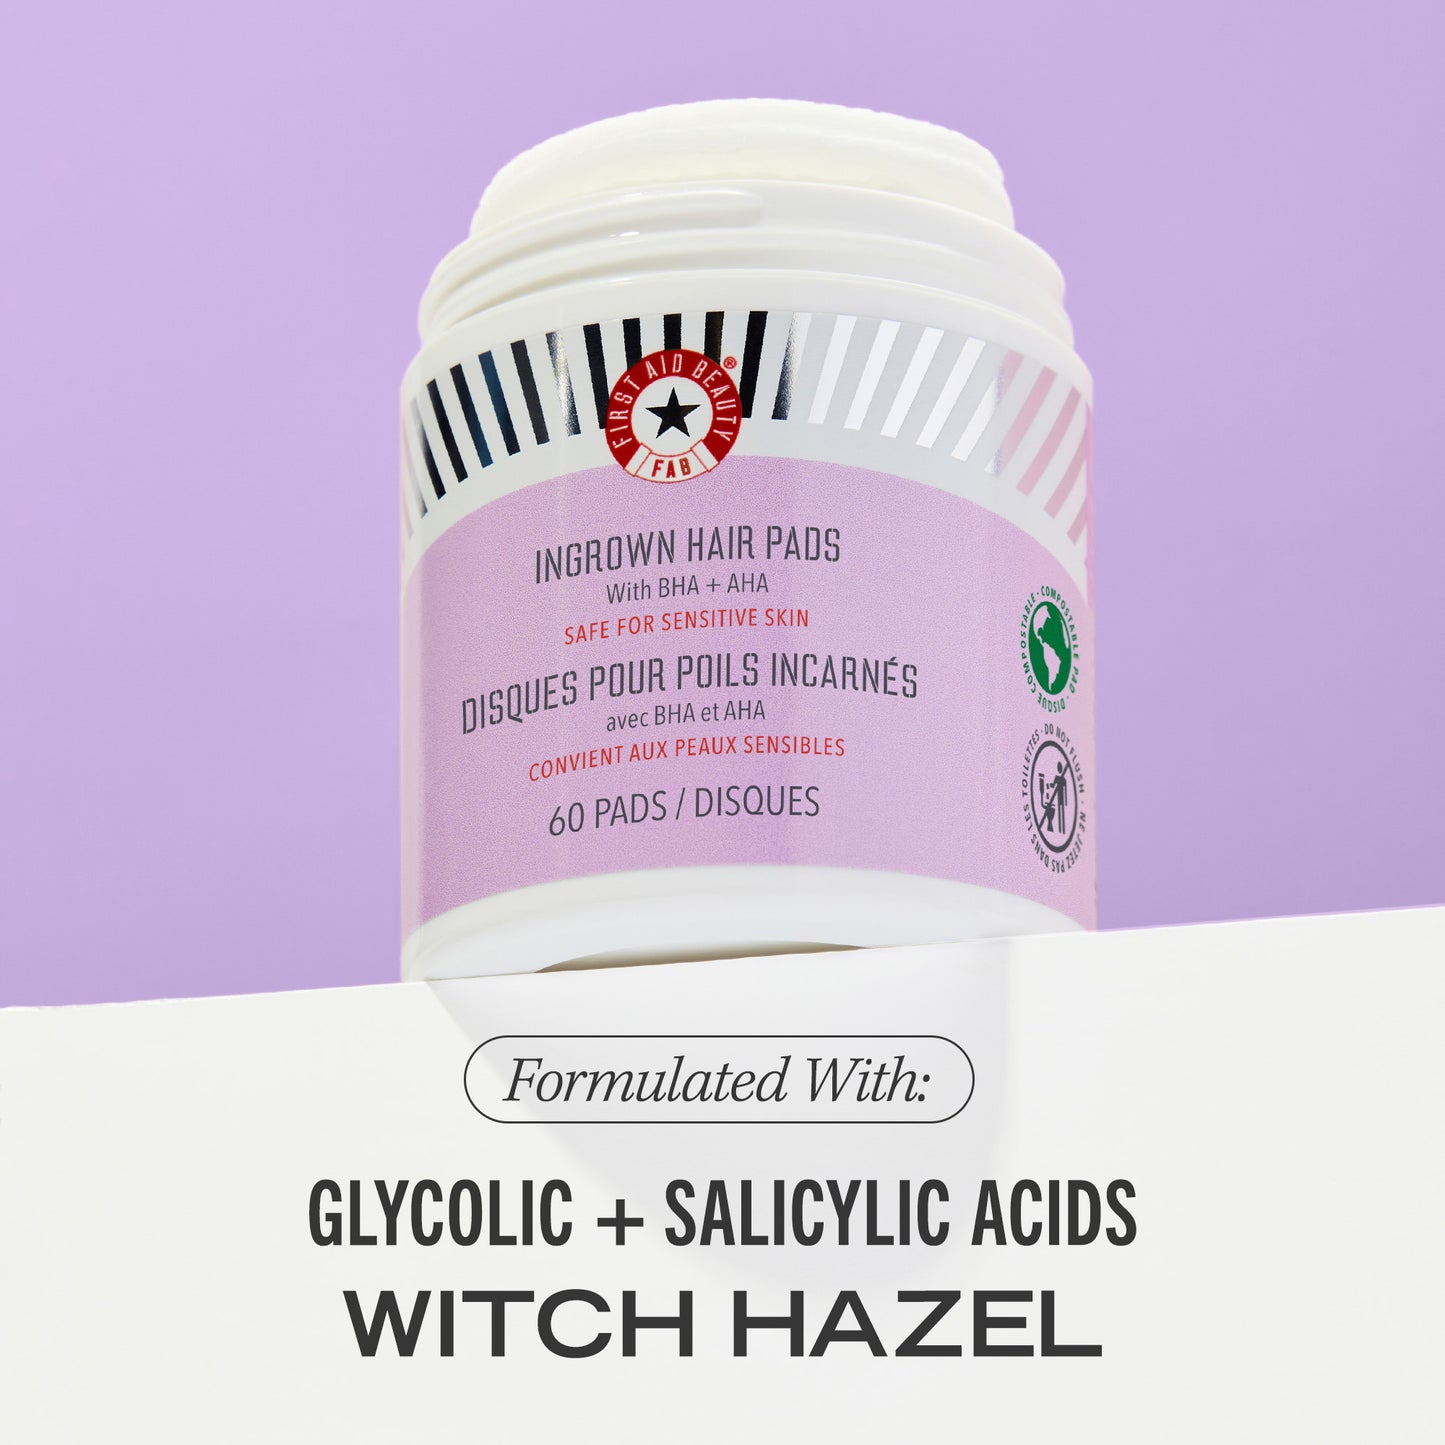 Jar of Ingrown Hair Pads. Formulated With: Glycolic + Salicylic Acids Witch Hazel.